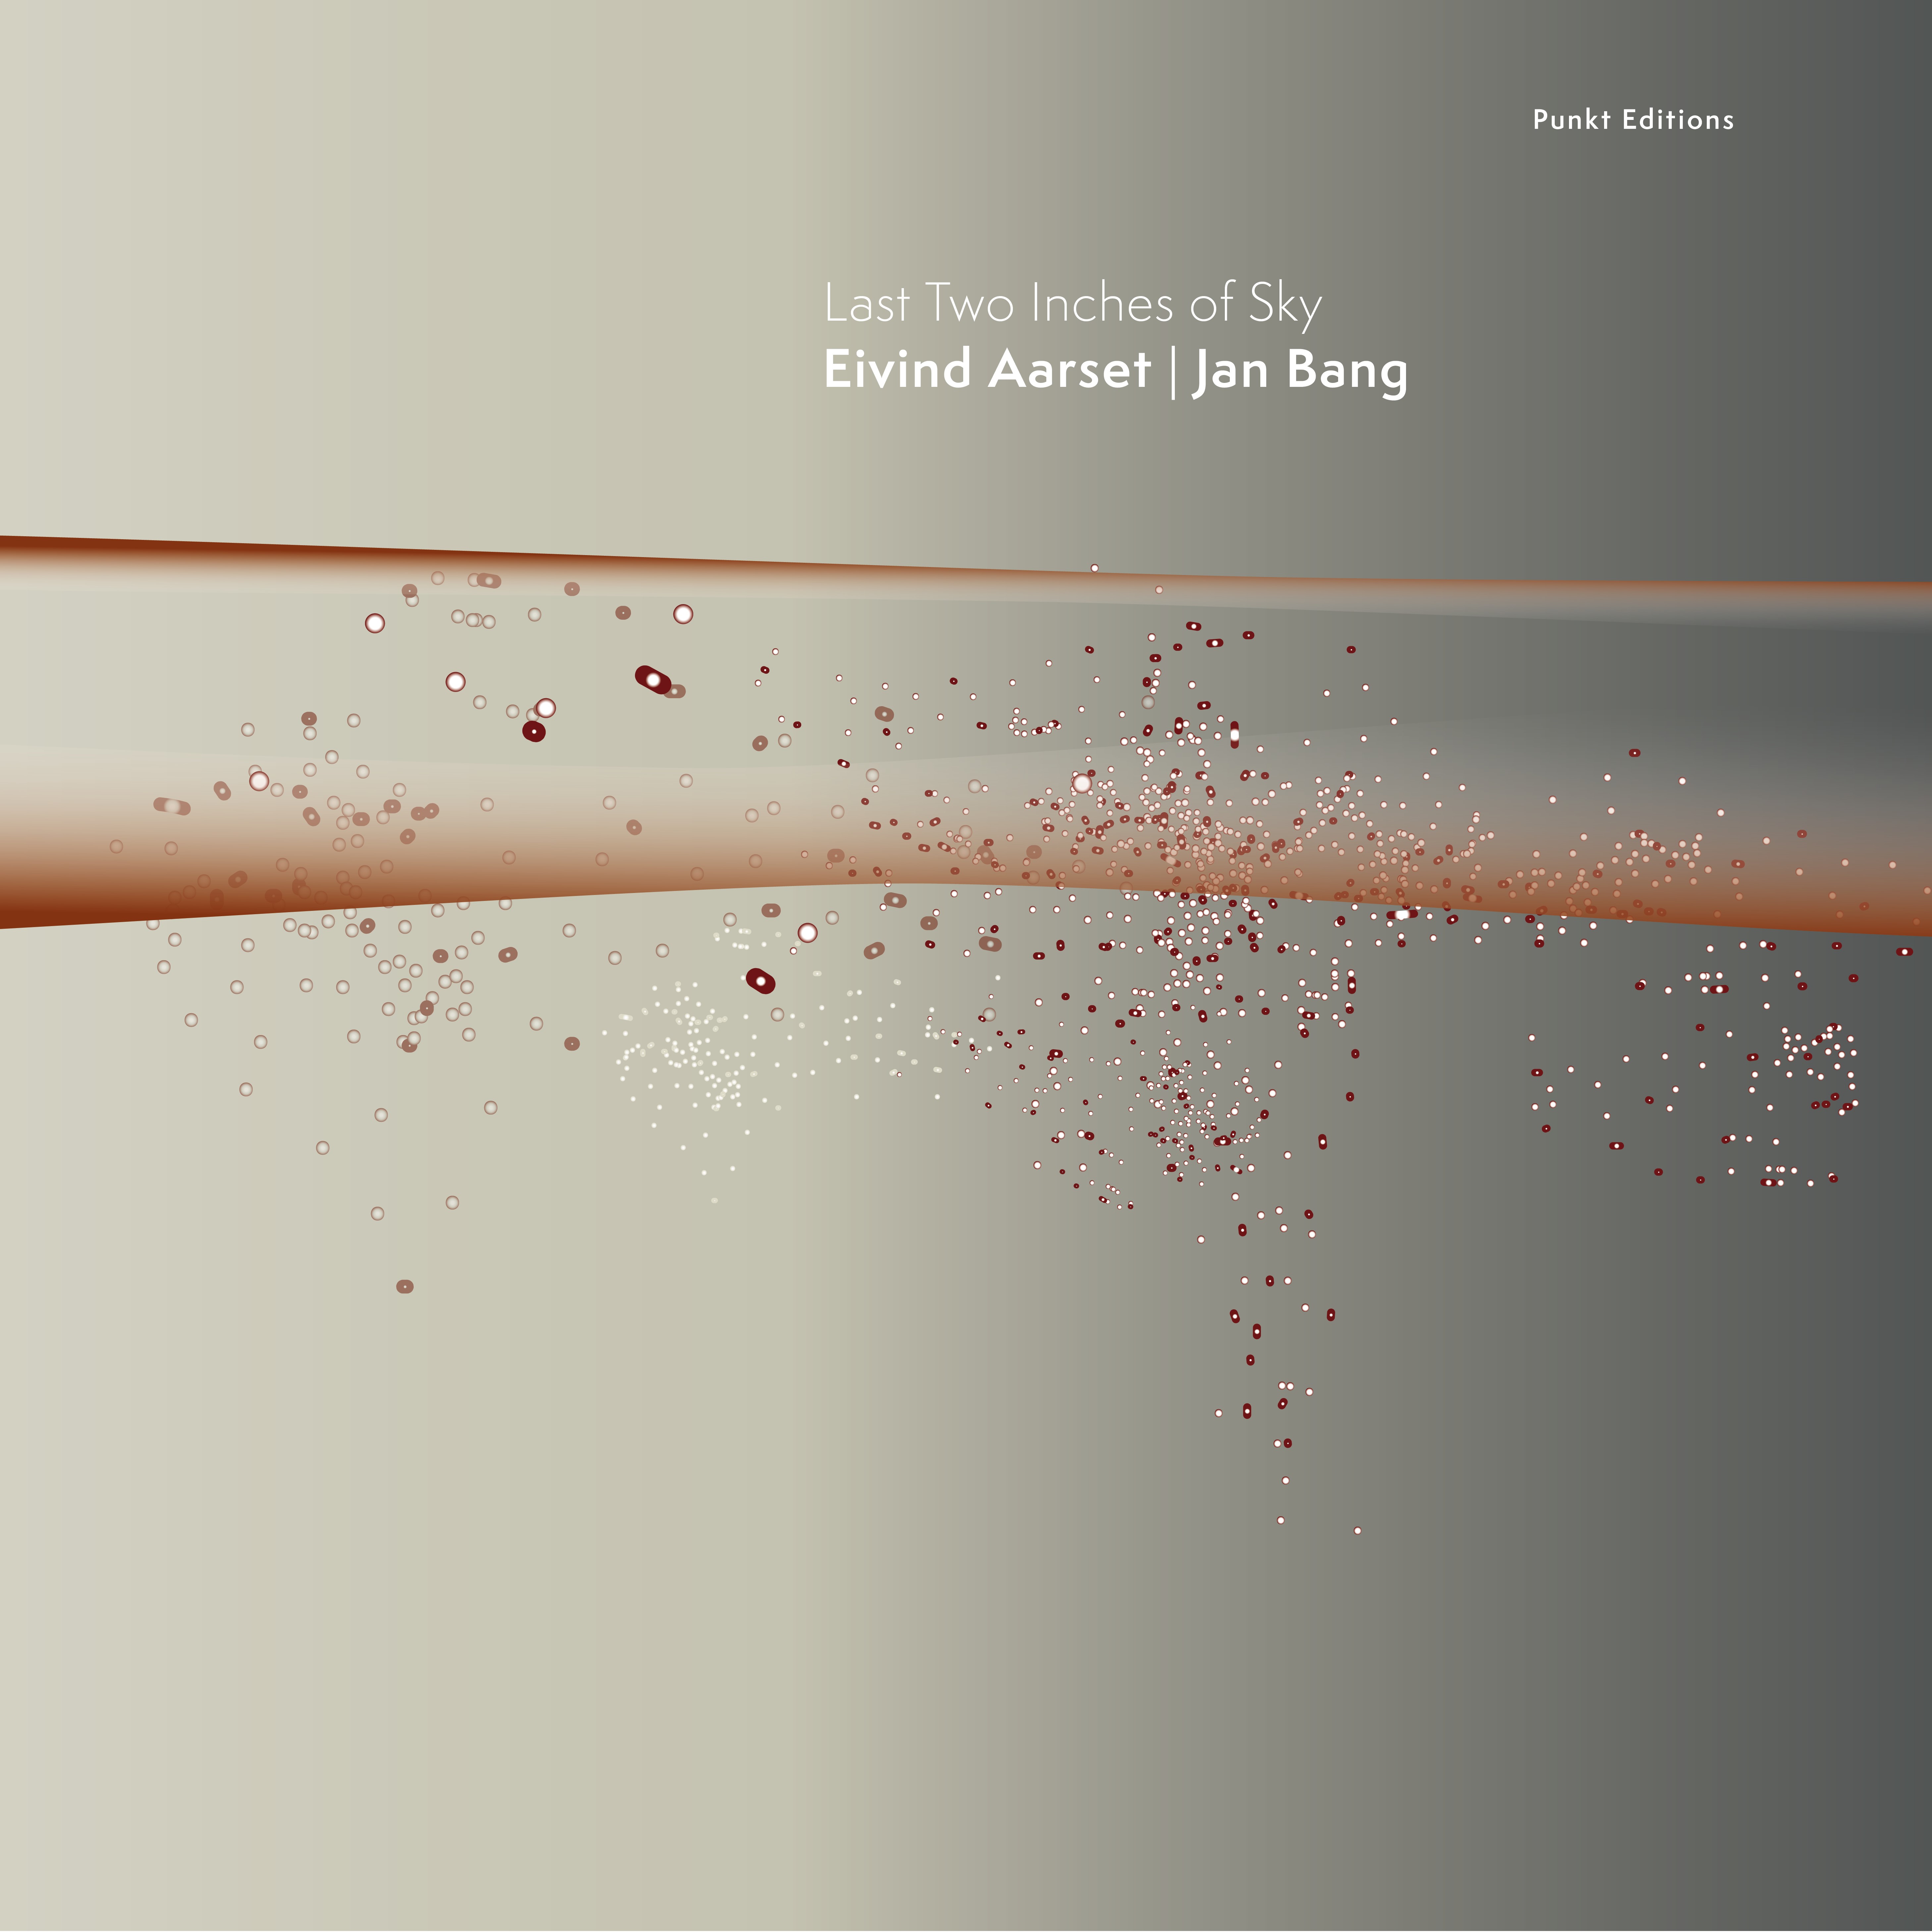 Last Two Inches of Sky - Eivind Aarset | Jan Bang